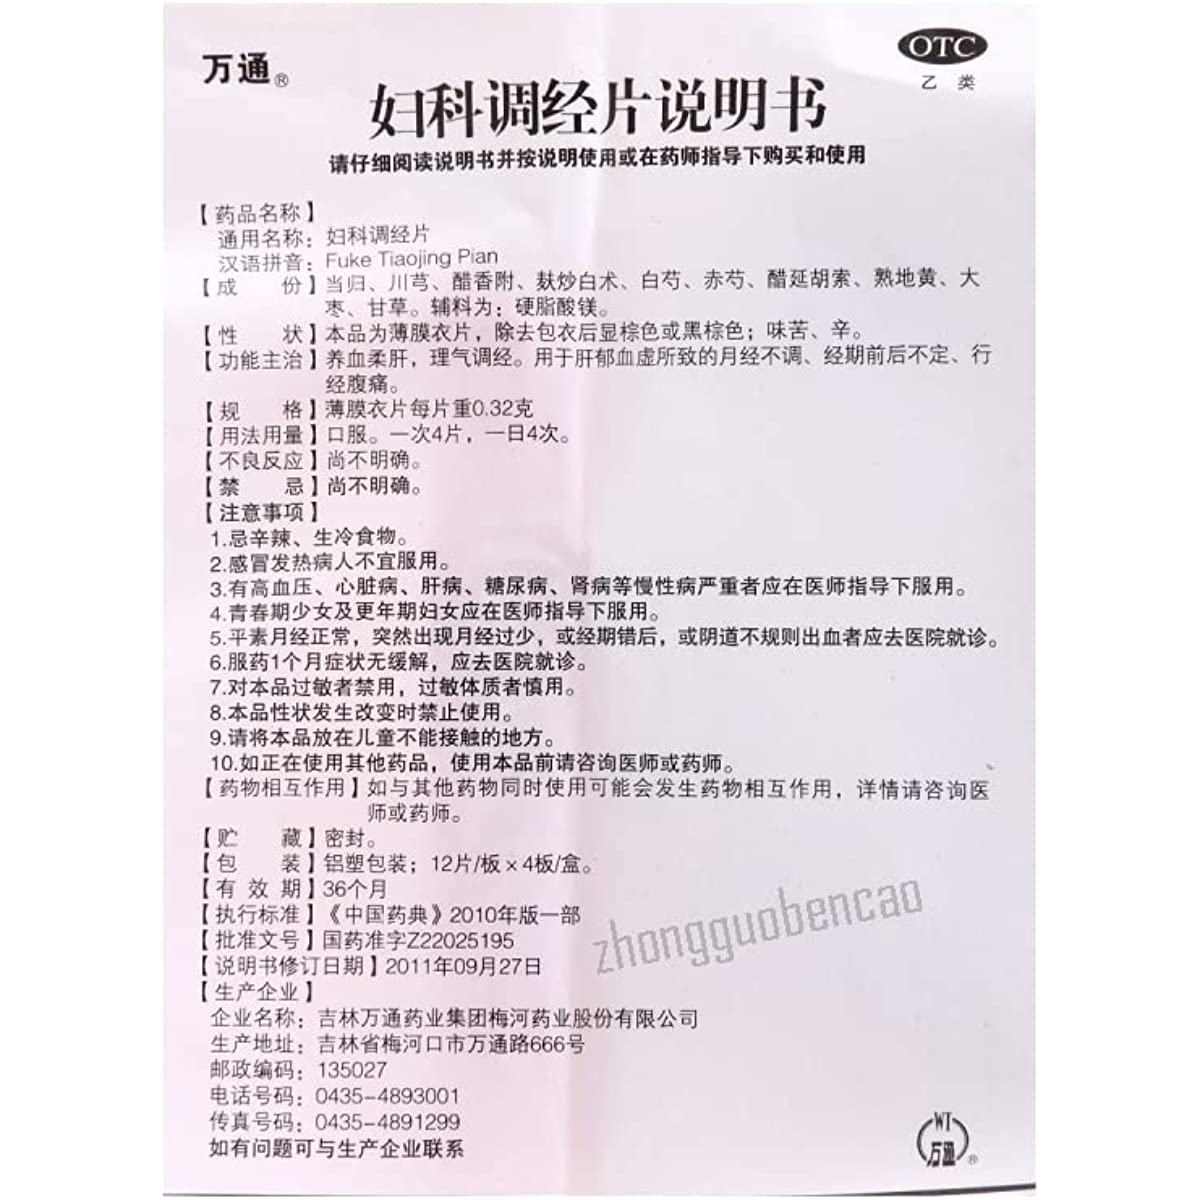 2 Boxes, Wantong Fuke TiaojingPian 48 Tablets / Box 妇科调经片